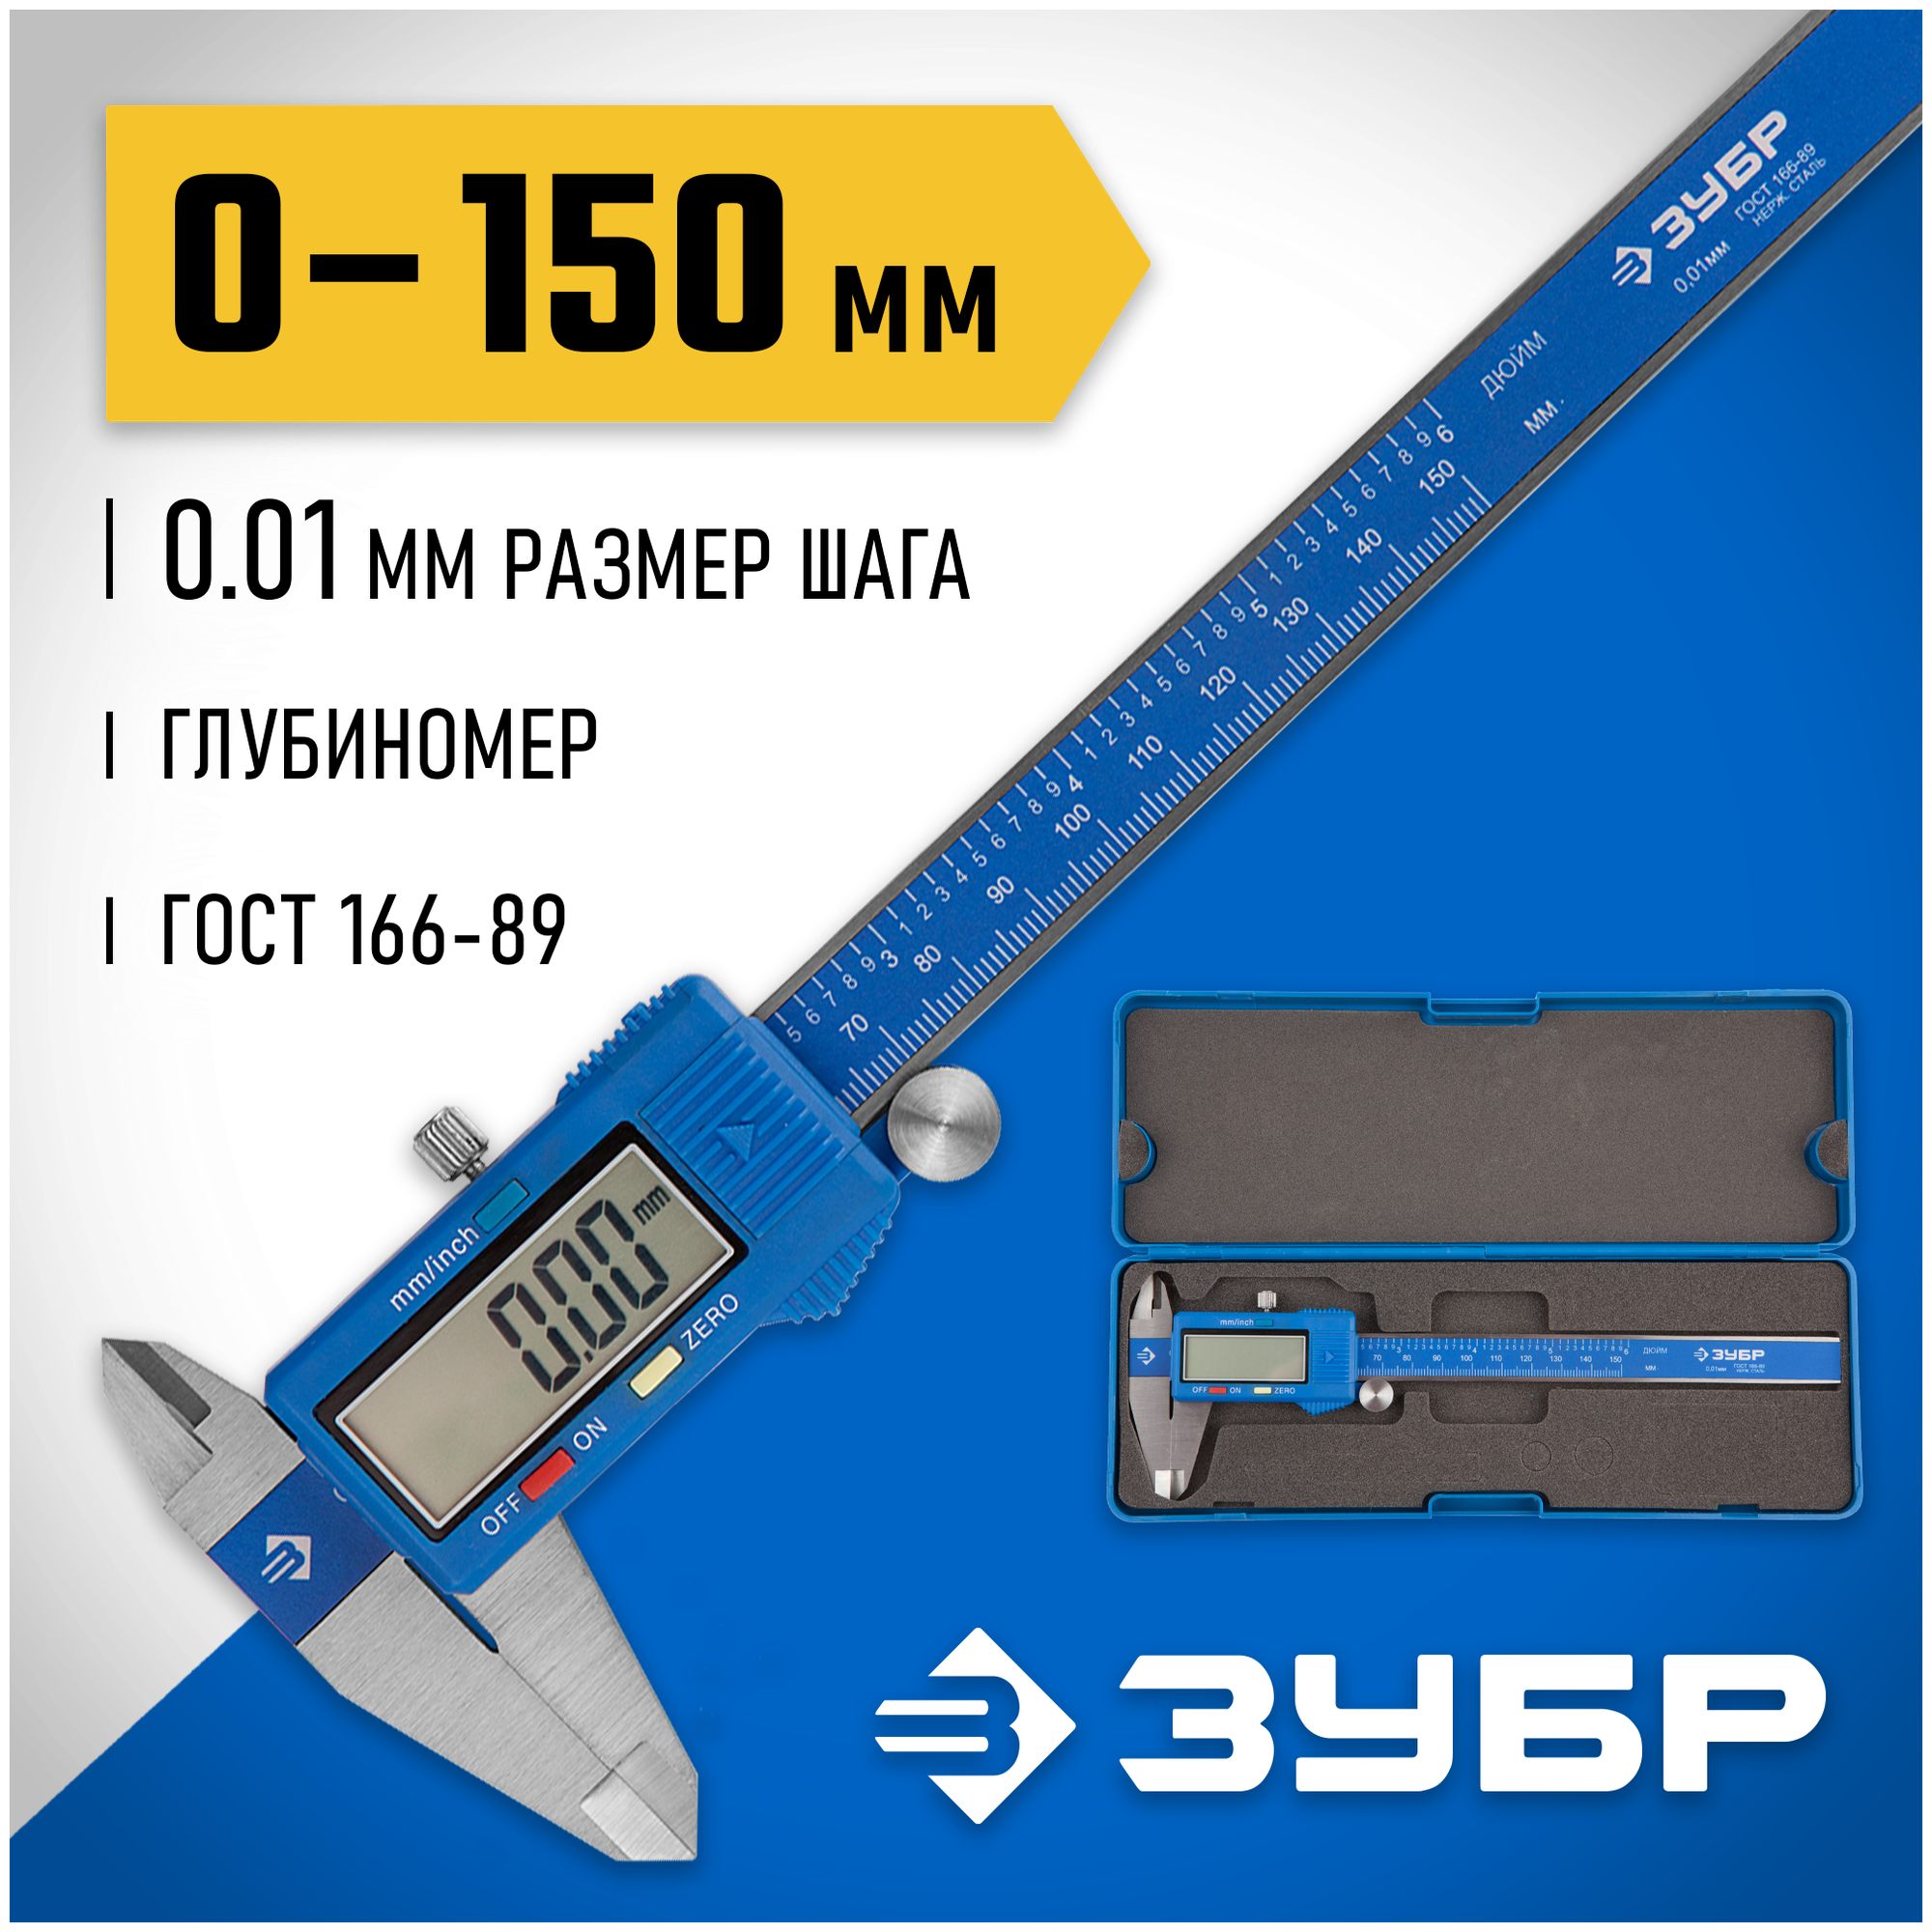 ЗУБР ШЦЦ-I-150-0.01, 150 мм, электронный штангенциркуль, Профессионал (34465-150)